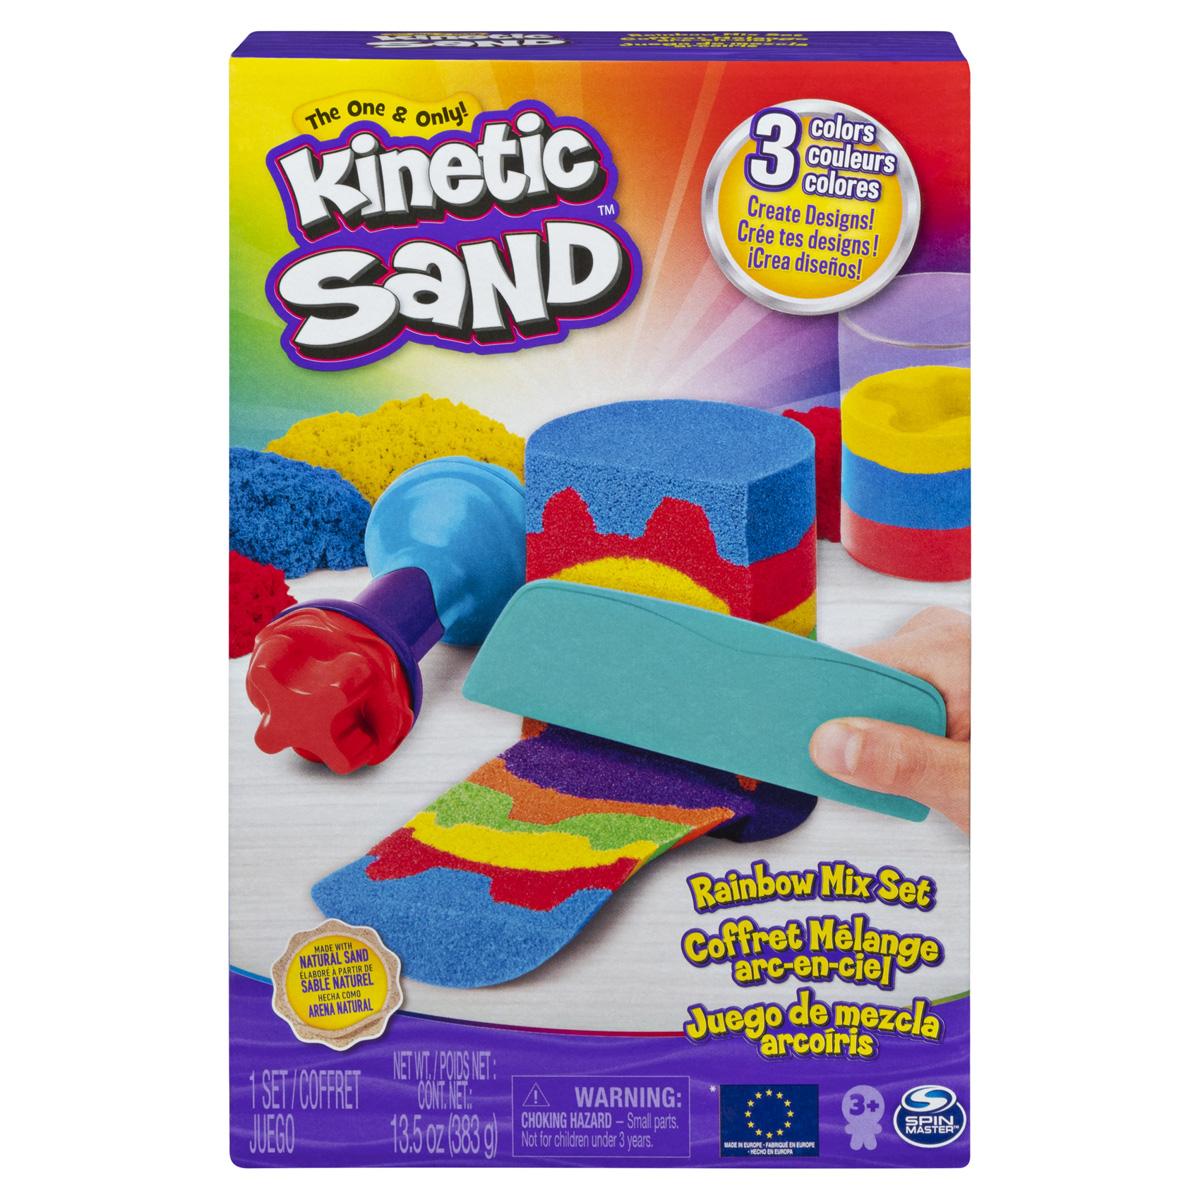 Kinetic Sand Rainbow Mix Set for $5